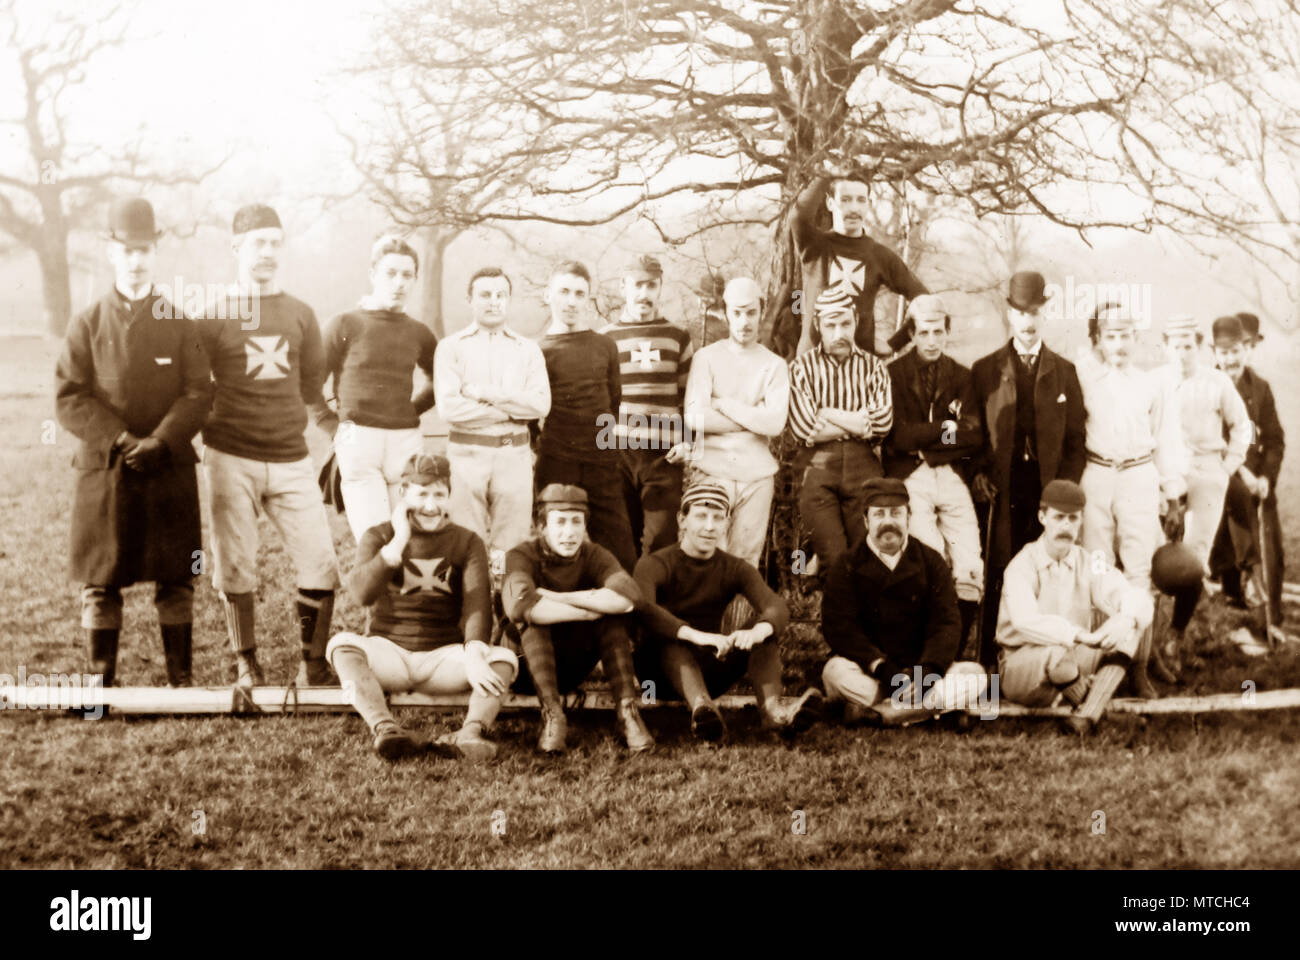 Football Club, St. Matthews, Denmark Hill, London in 1888 Stock Photo